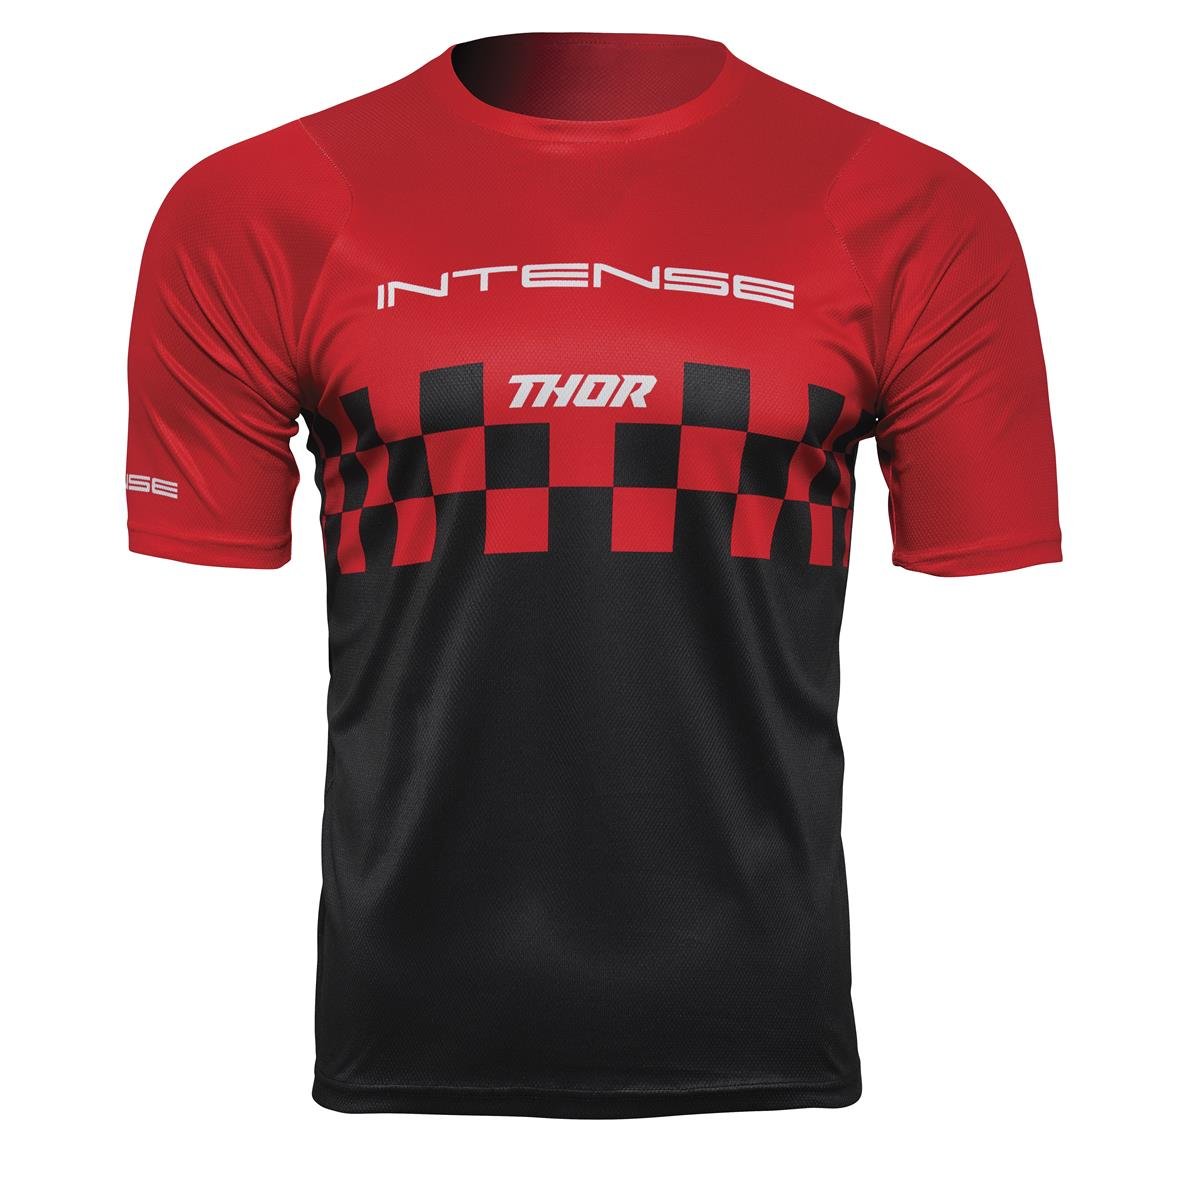 Thor MTB Jerseys Short Sleeve Intense Chex - Red/Black